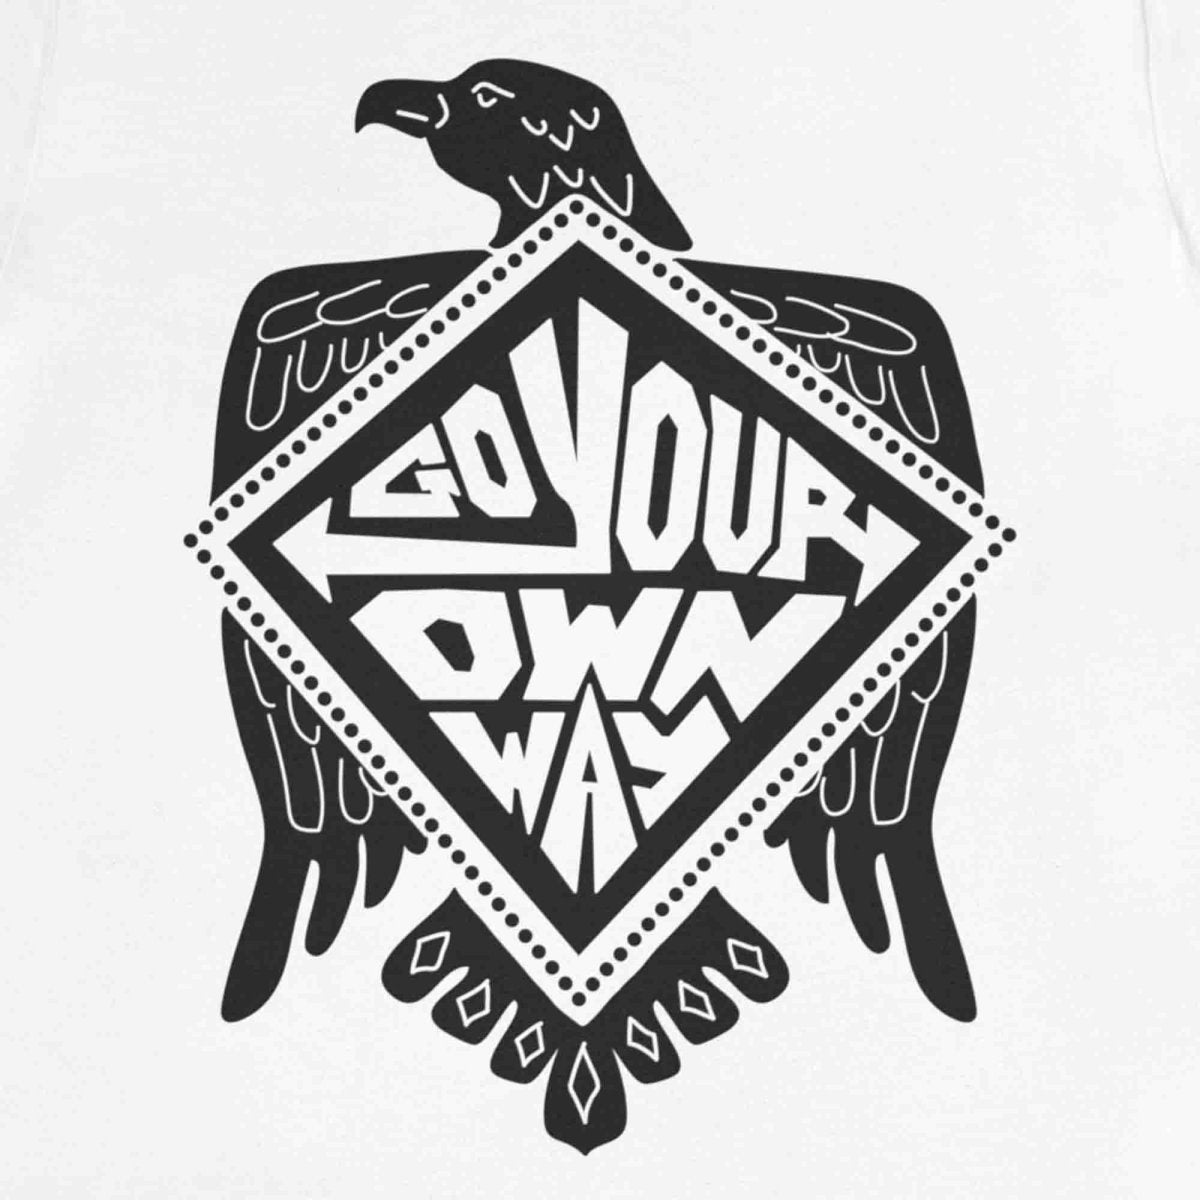 Your Own Way Premium T-Shirt, New Start, Individuality, Traveler, Entrepreneur